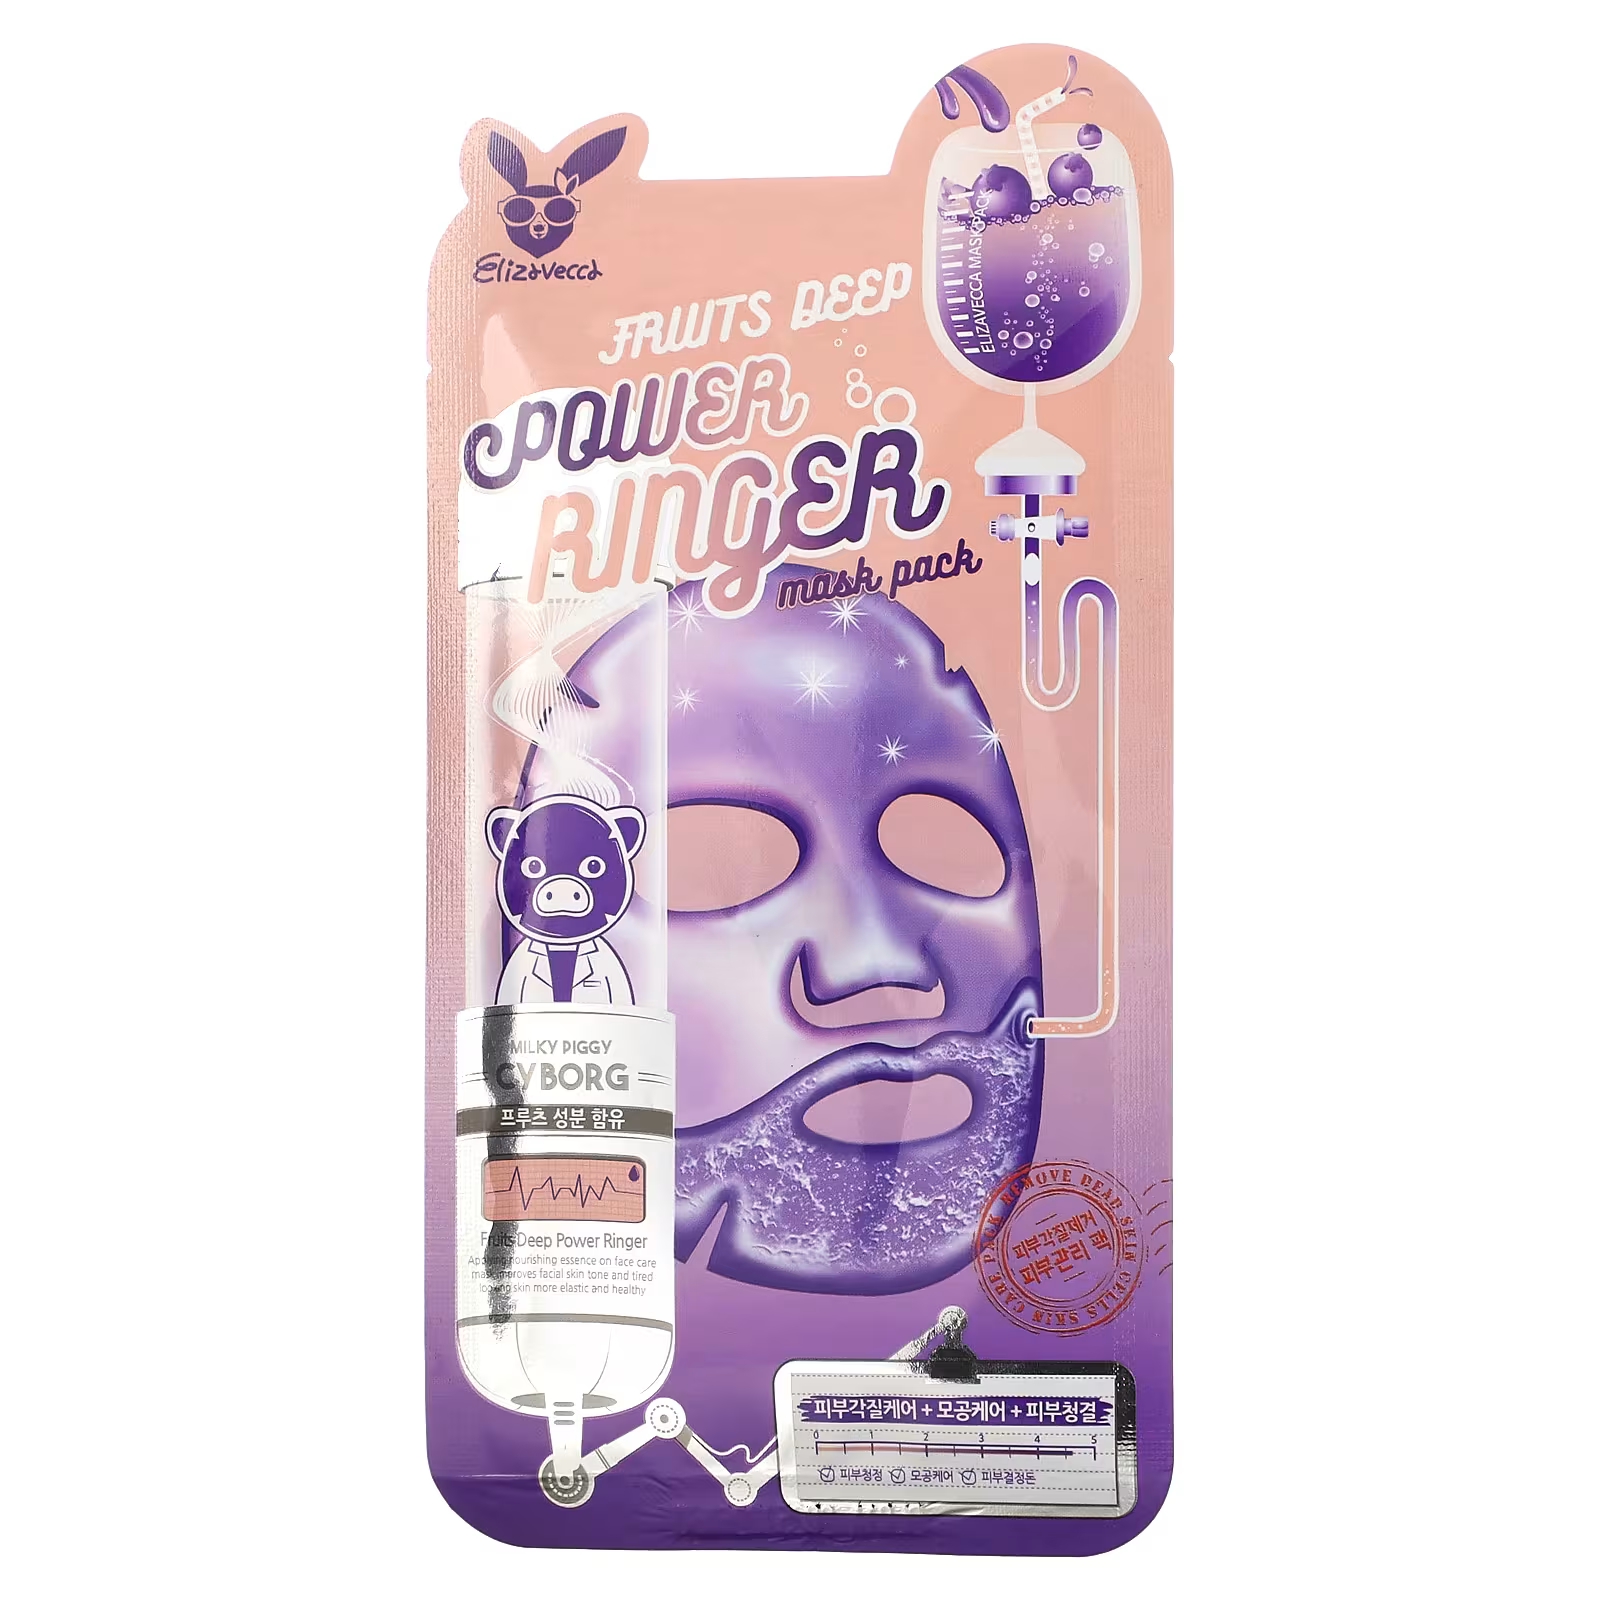 Elizavecca Milky Piggy Cyborg Fruits Deep Power Ringer Beauty Mask Pack, 1 тканевая маска, 0,78 жидких унций (23 мл)